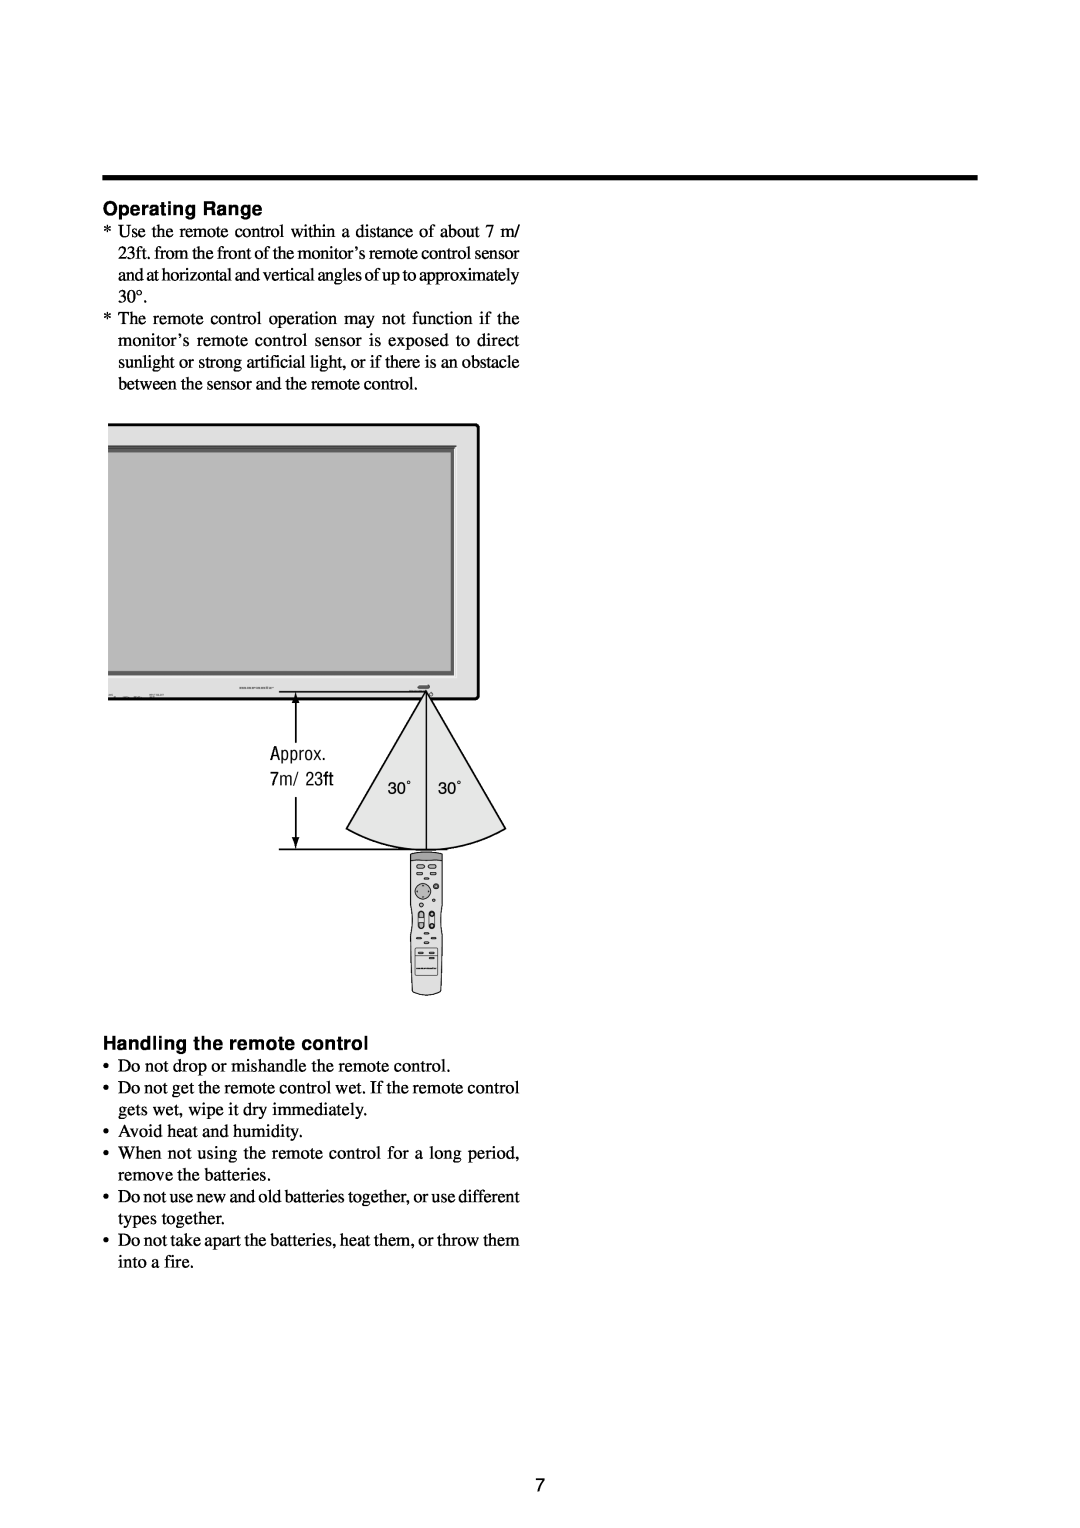 Marantz PD5020D manual Operating Range, Handling the remote control 